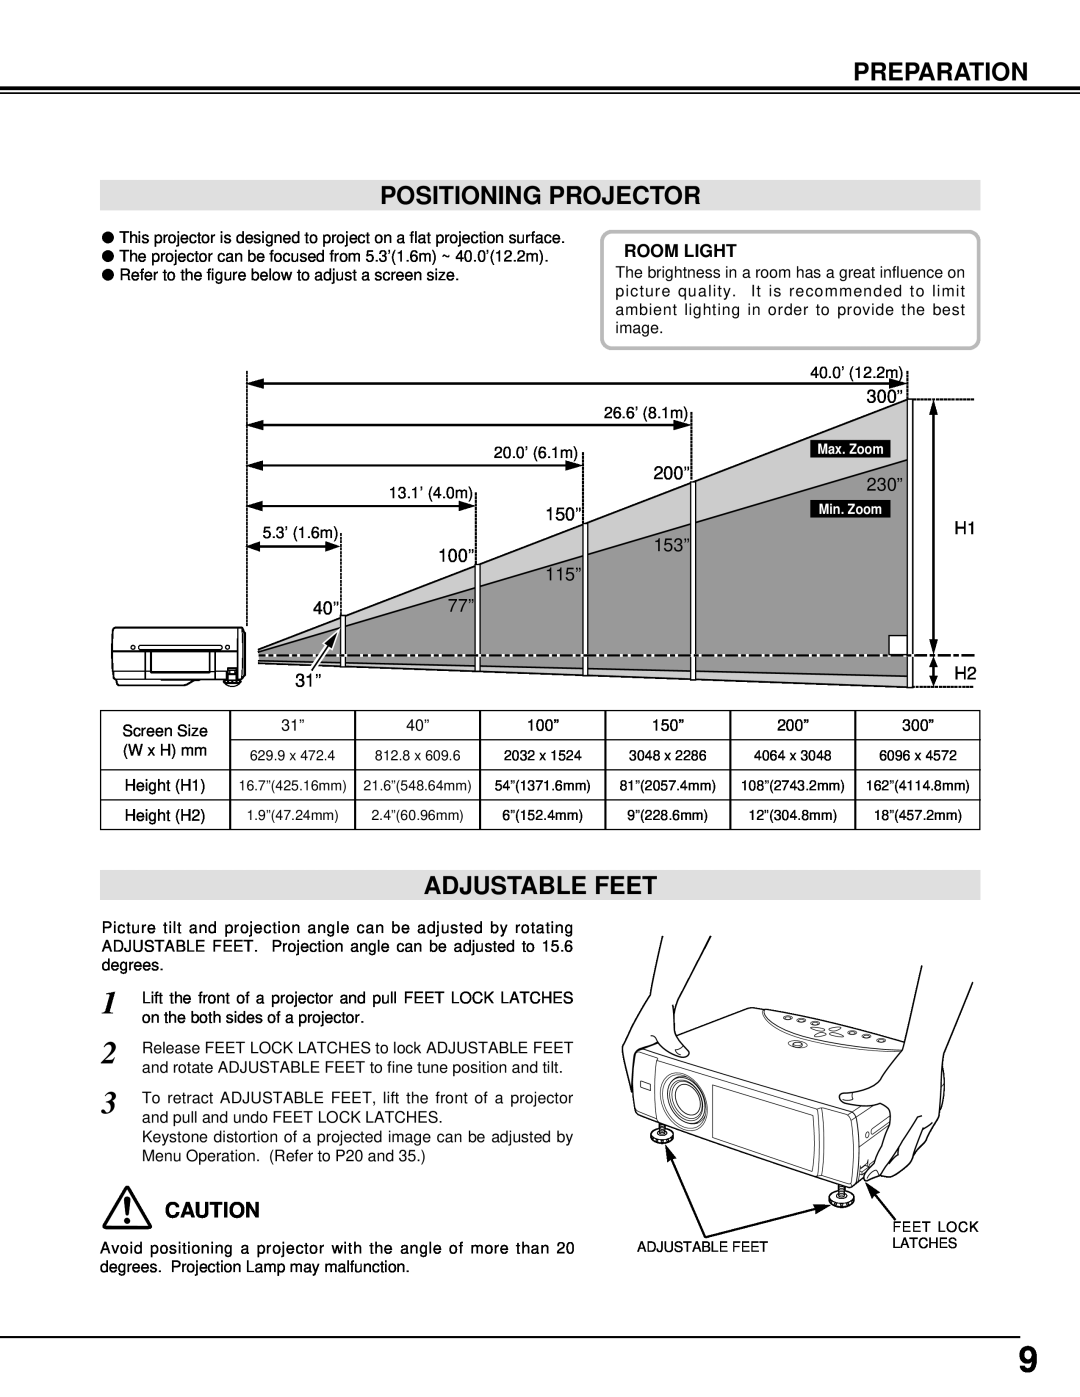 Eiki LC-XNB3W Preparation Positioning Projector, Adjustable Feet, 200”, 150”, 153” 100” 115” 40”77”, 300”, 230” 